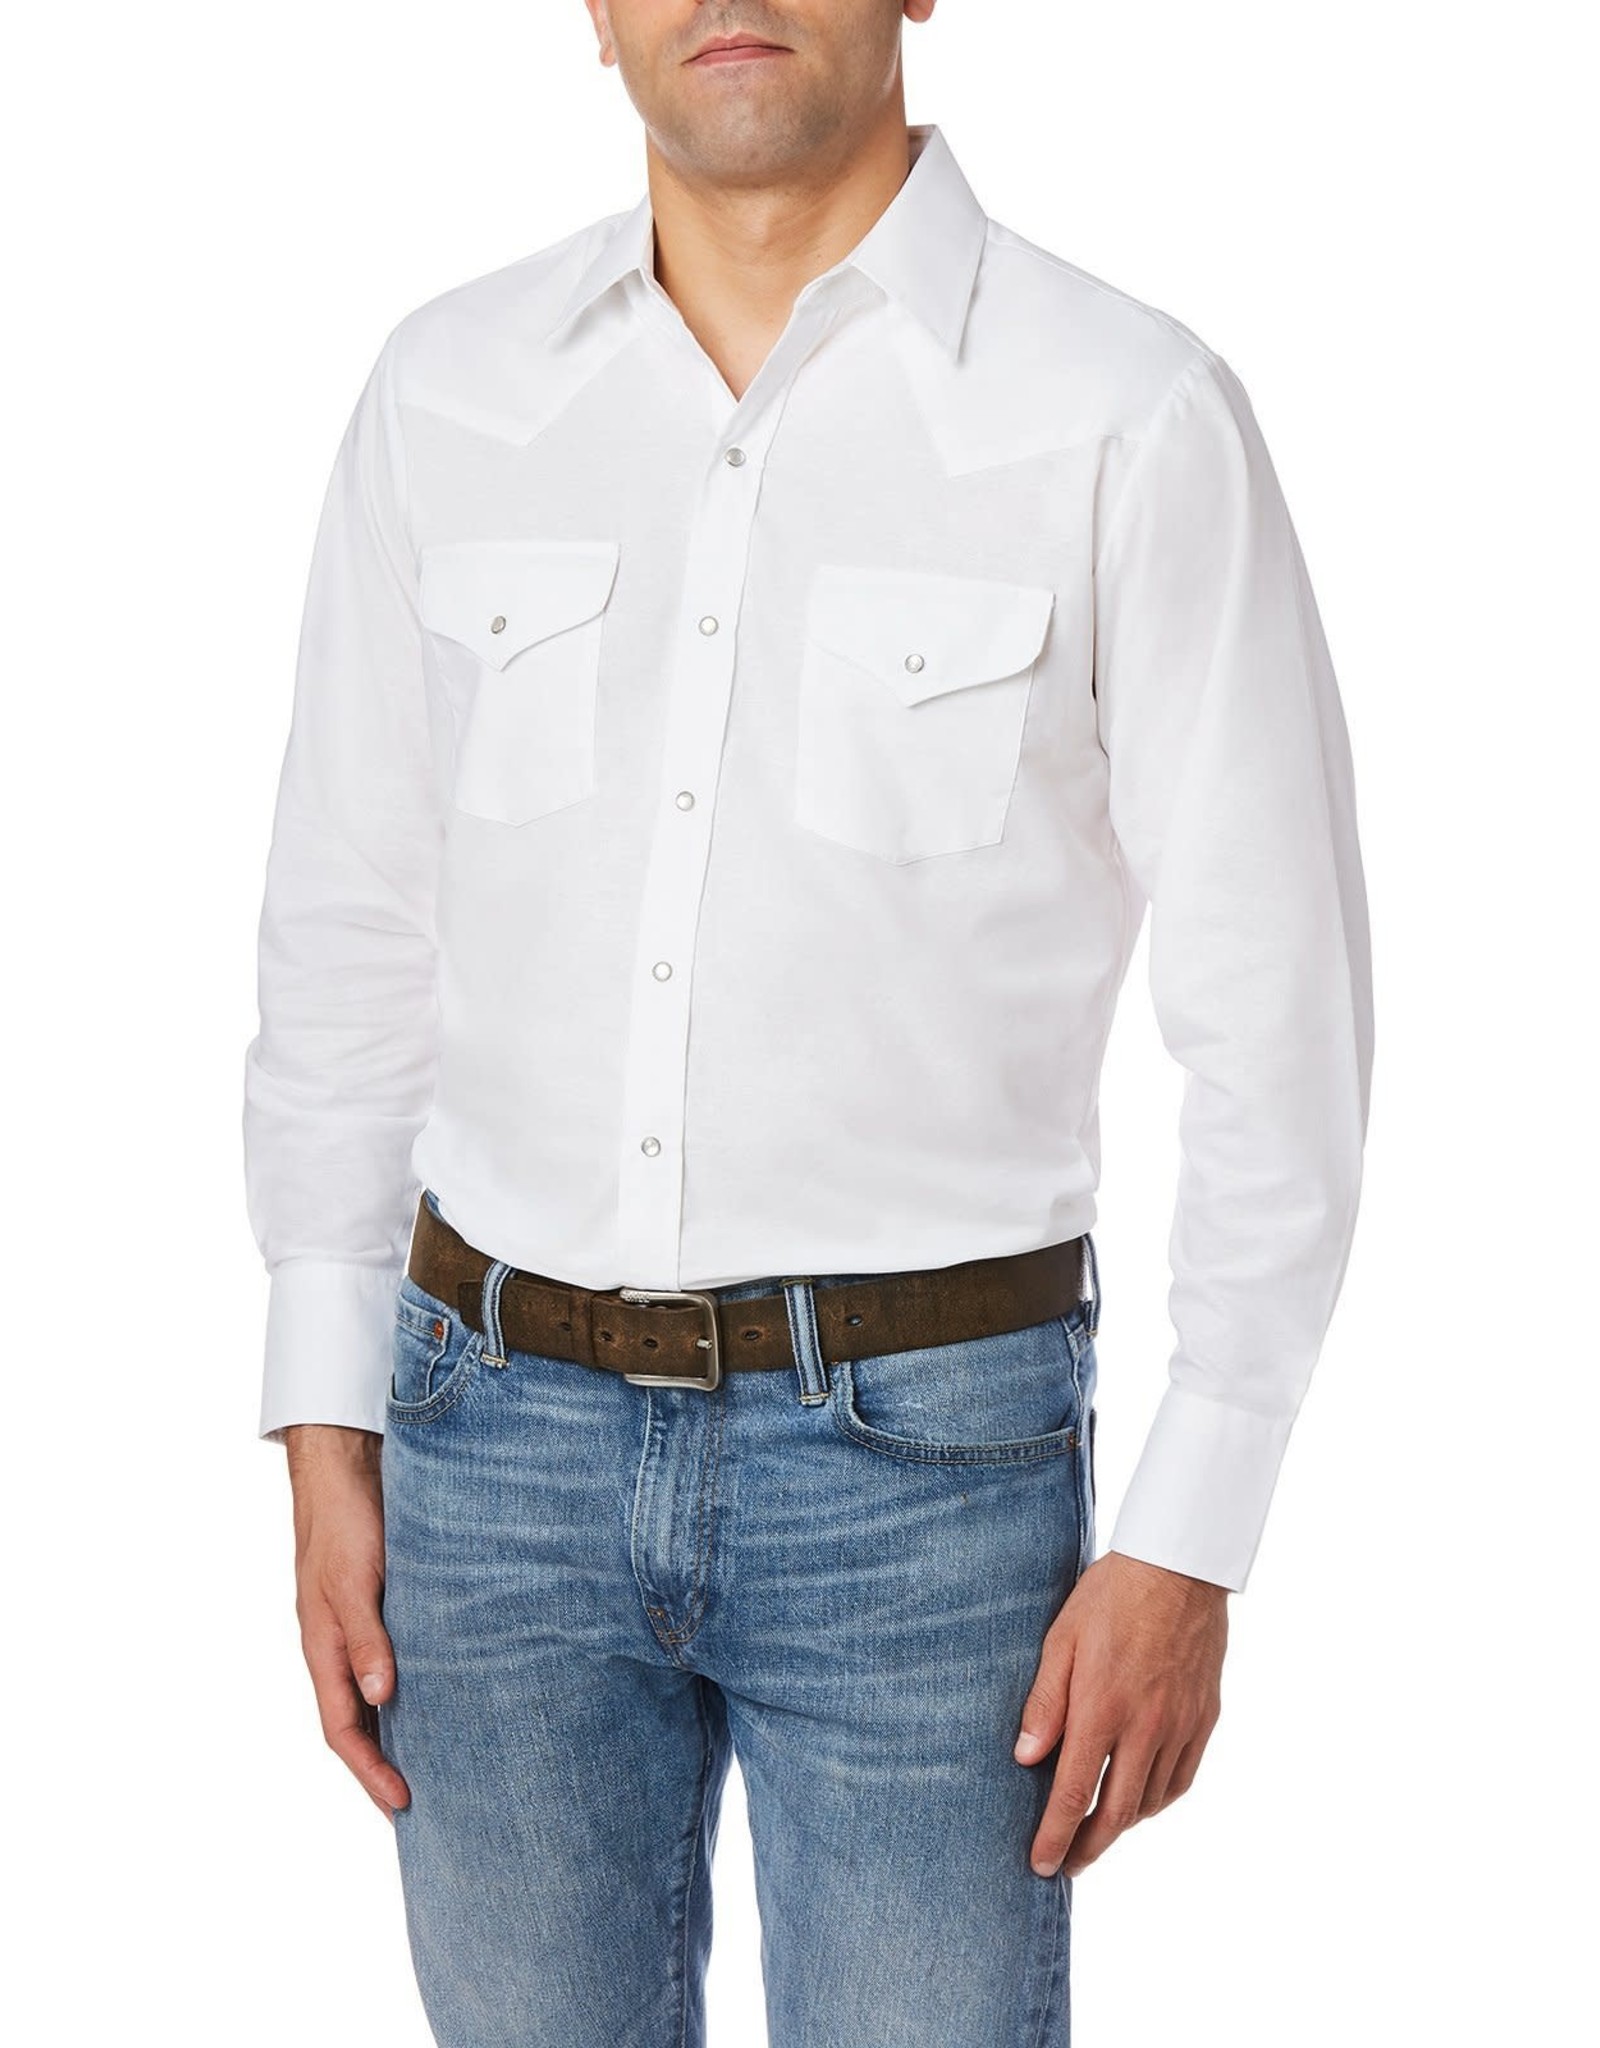 Ely Walker Men's Wrinkle Resistant White 1520965 Western Shirt